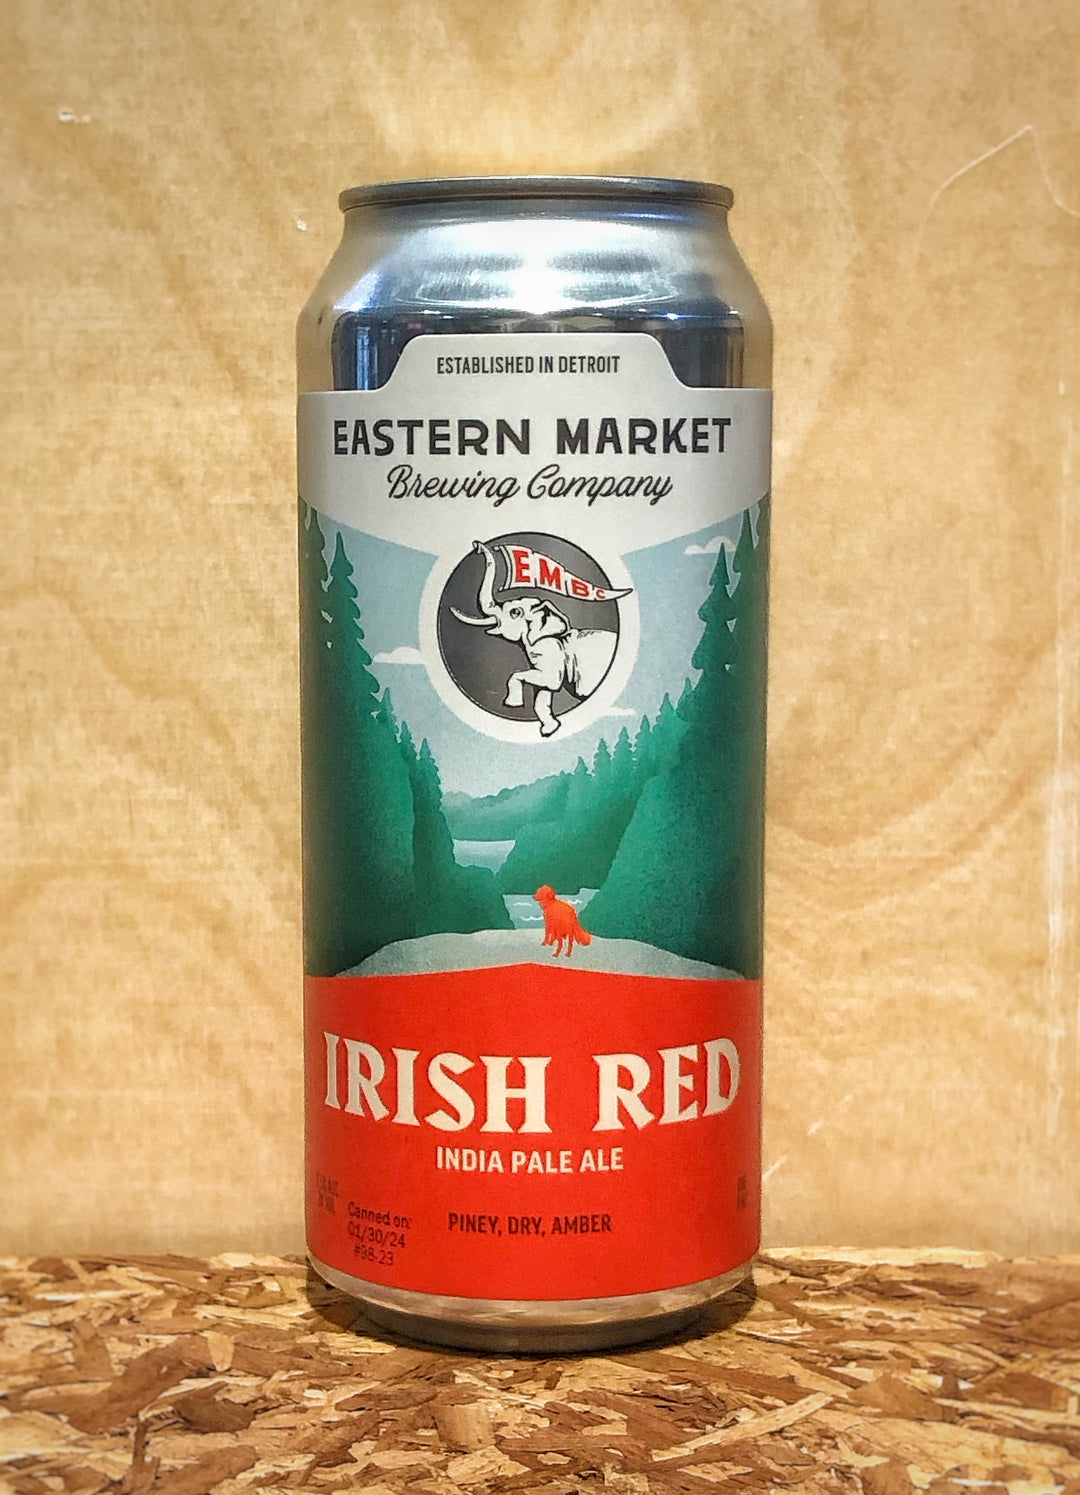 Eastern Market Brewing Co. 'Irish Red' Amber India Pale Ale (Detroit, MI)